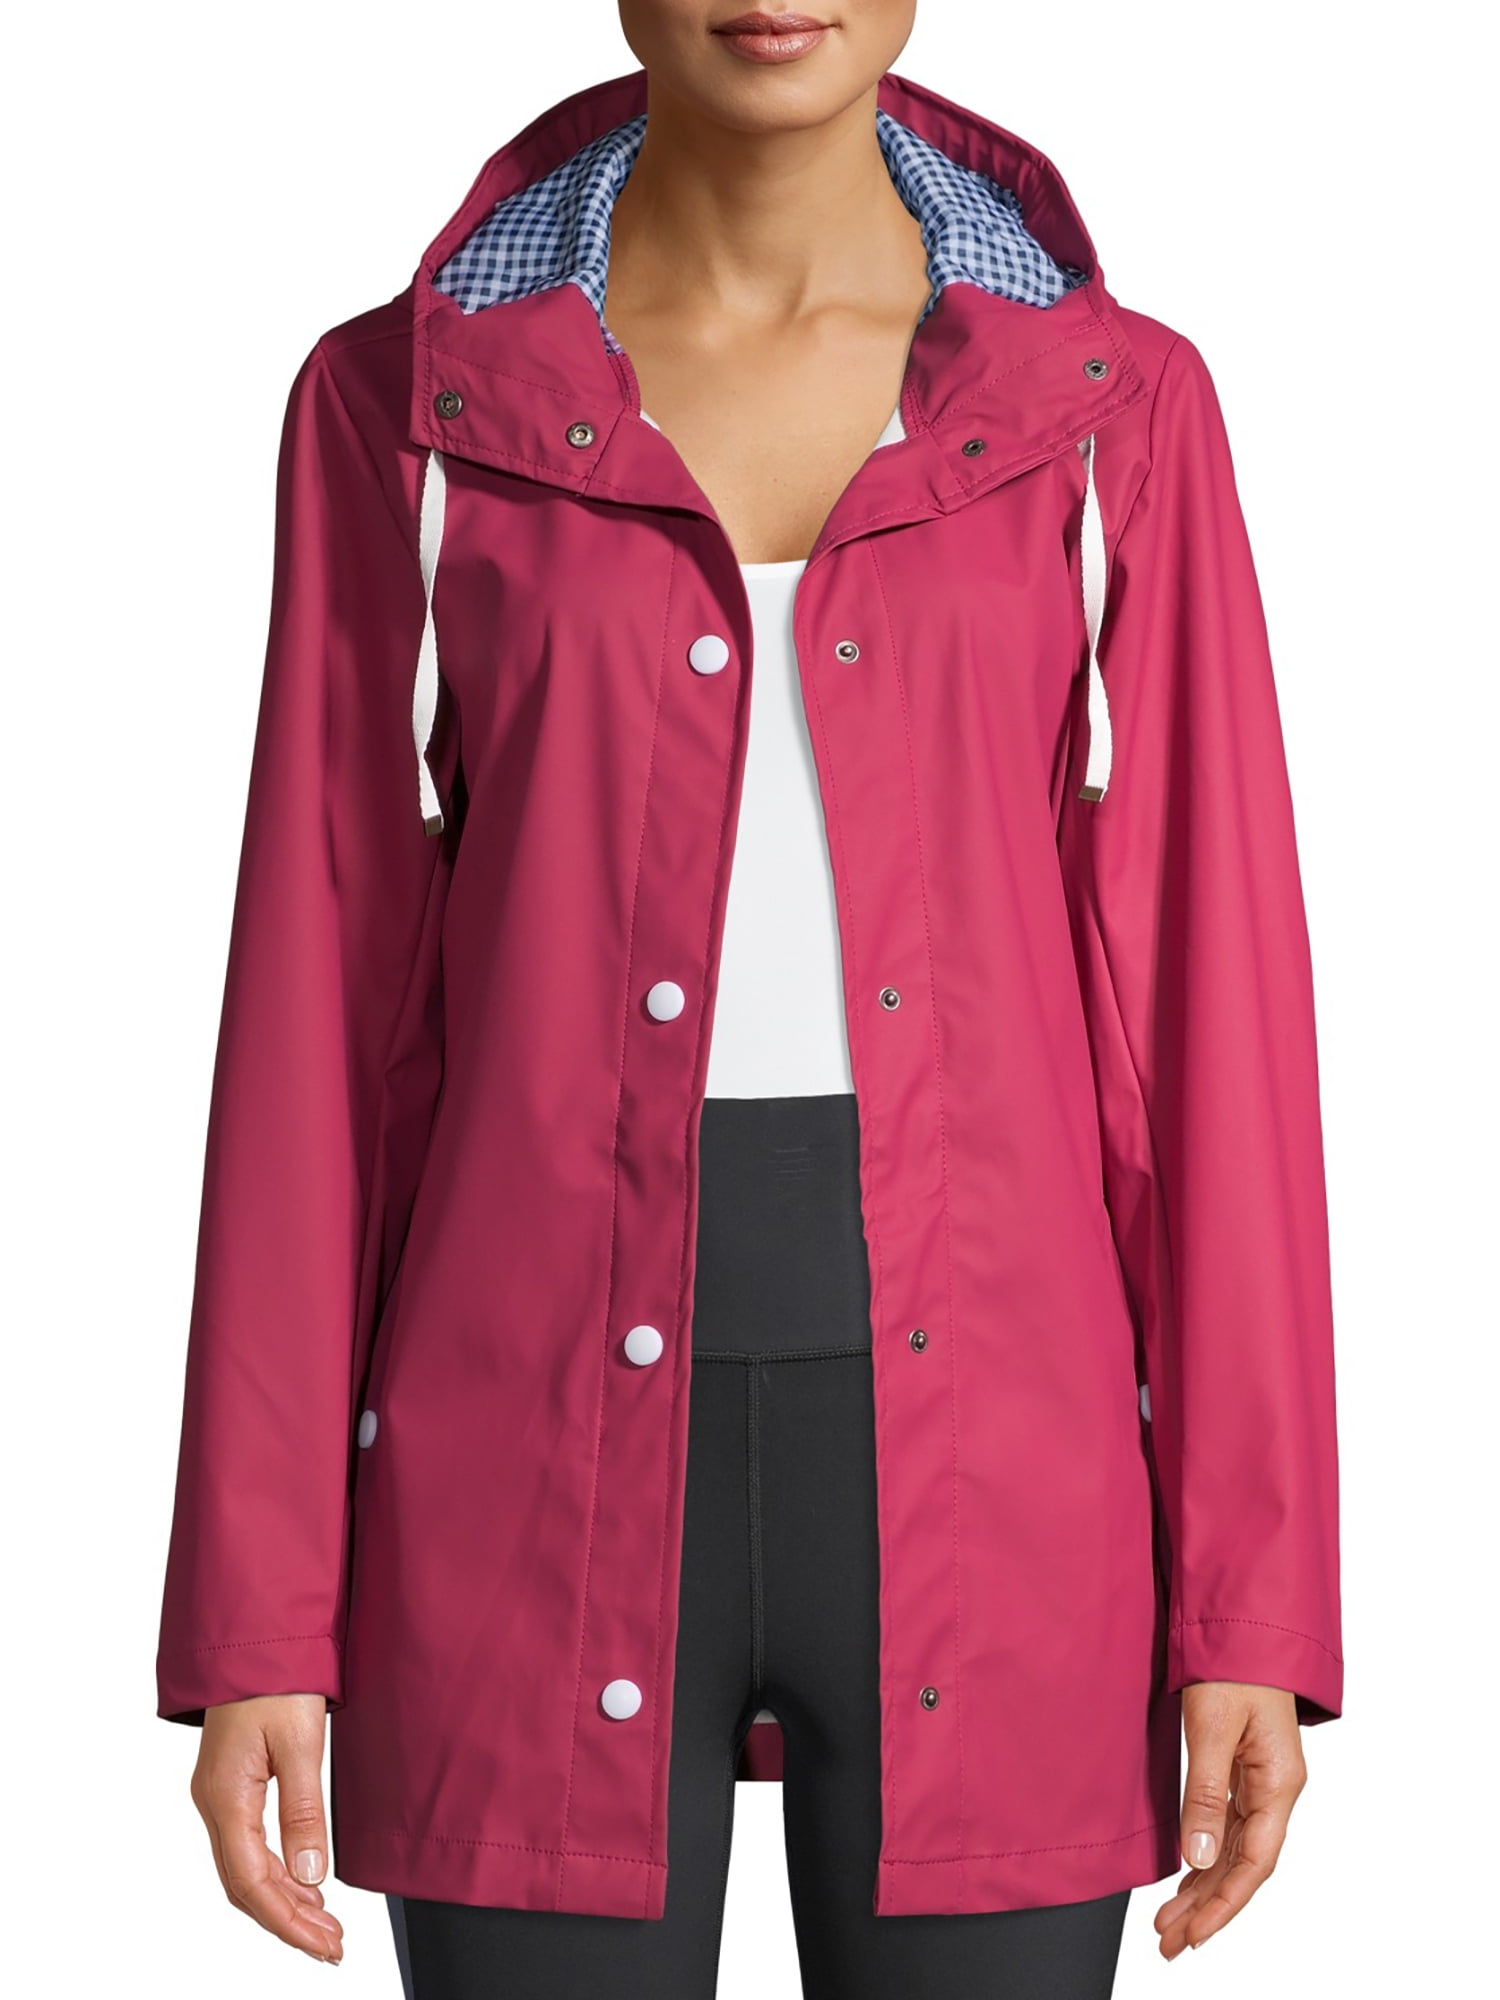 Big Chill Womens Waterproof Packable Hooded Outdoor Active Rainwear 